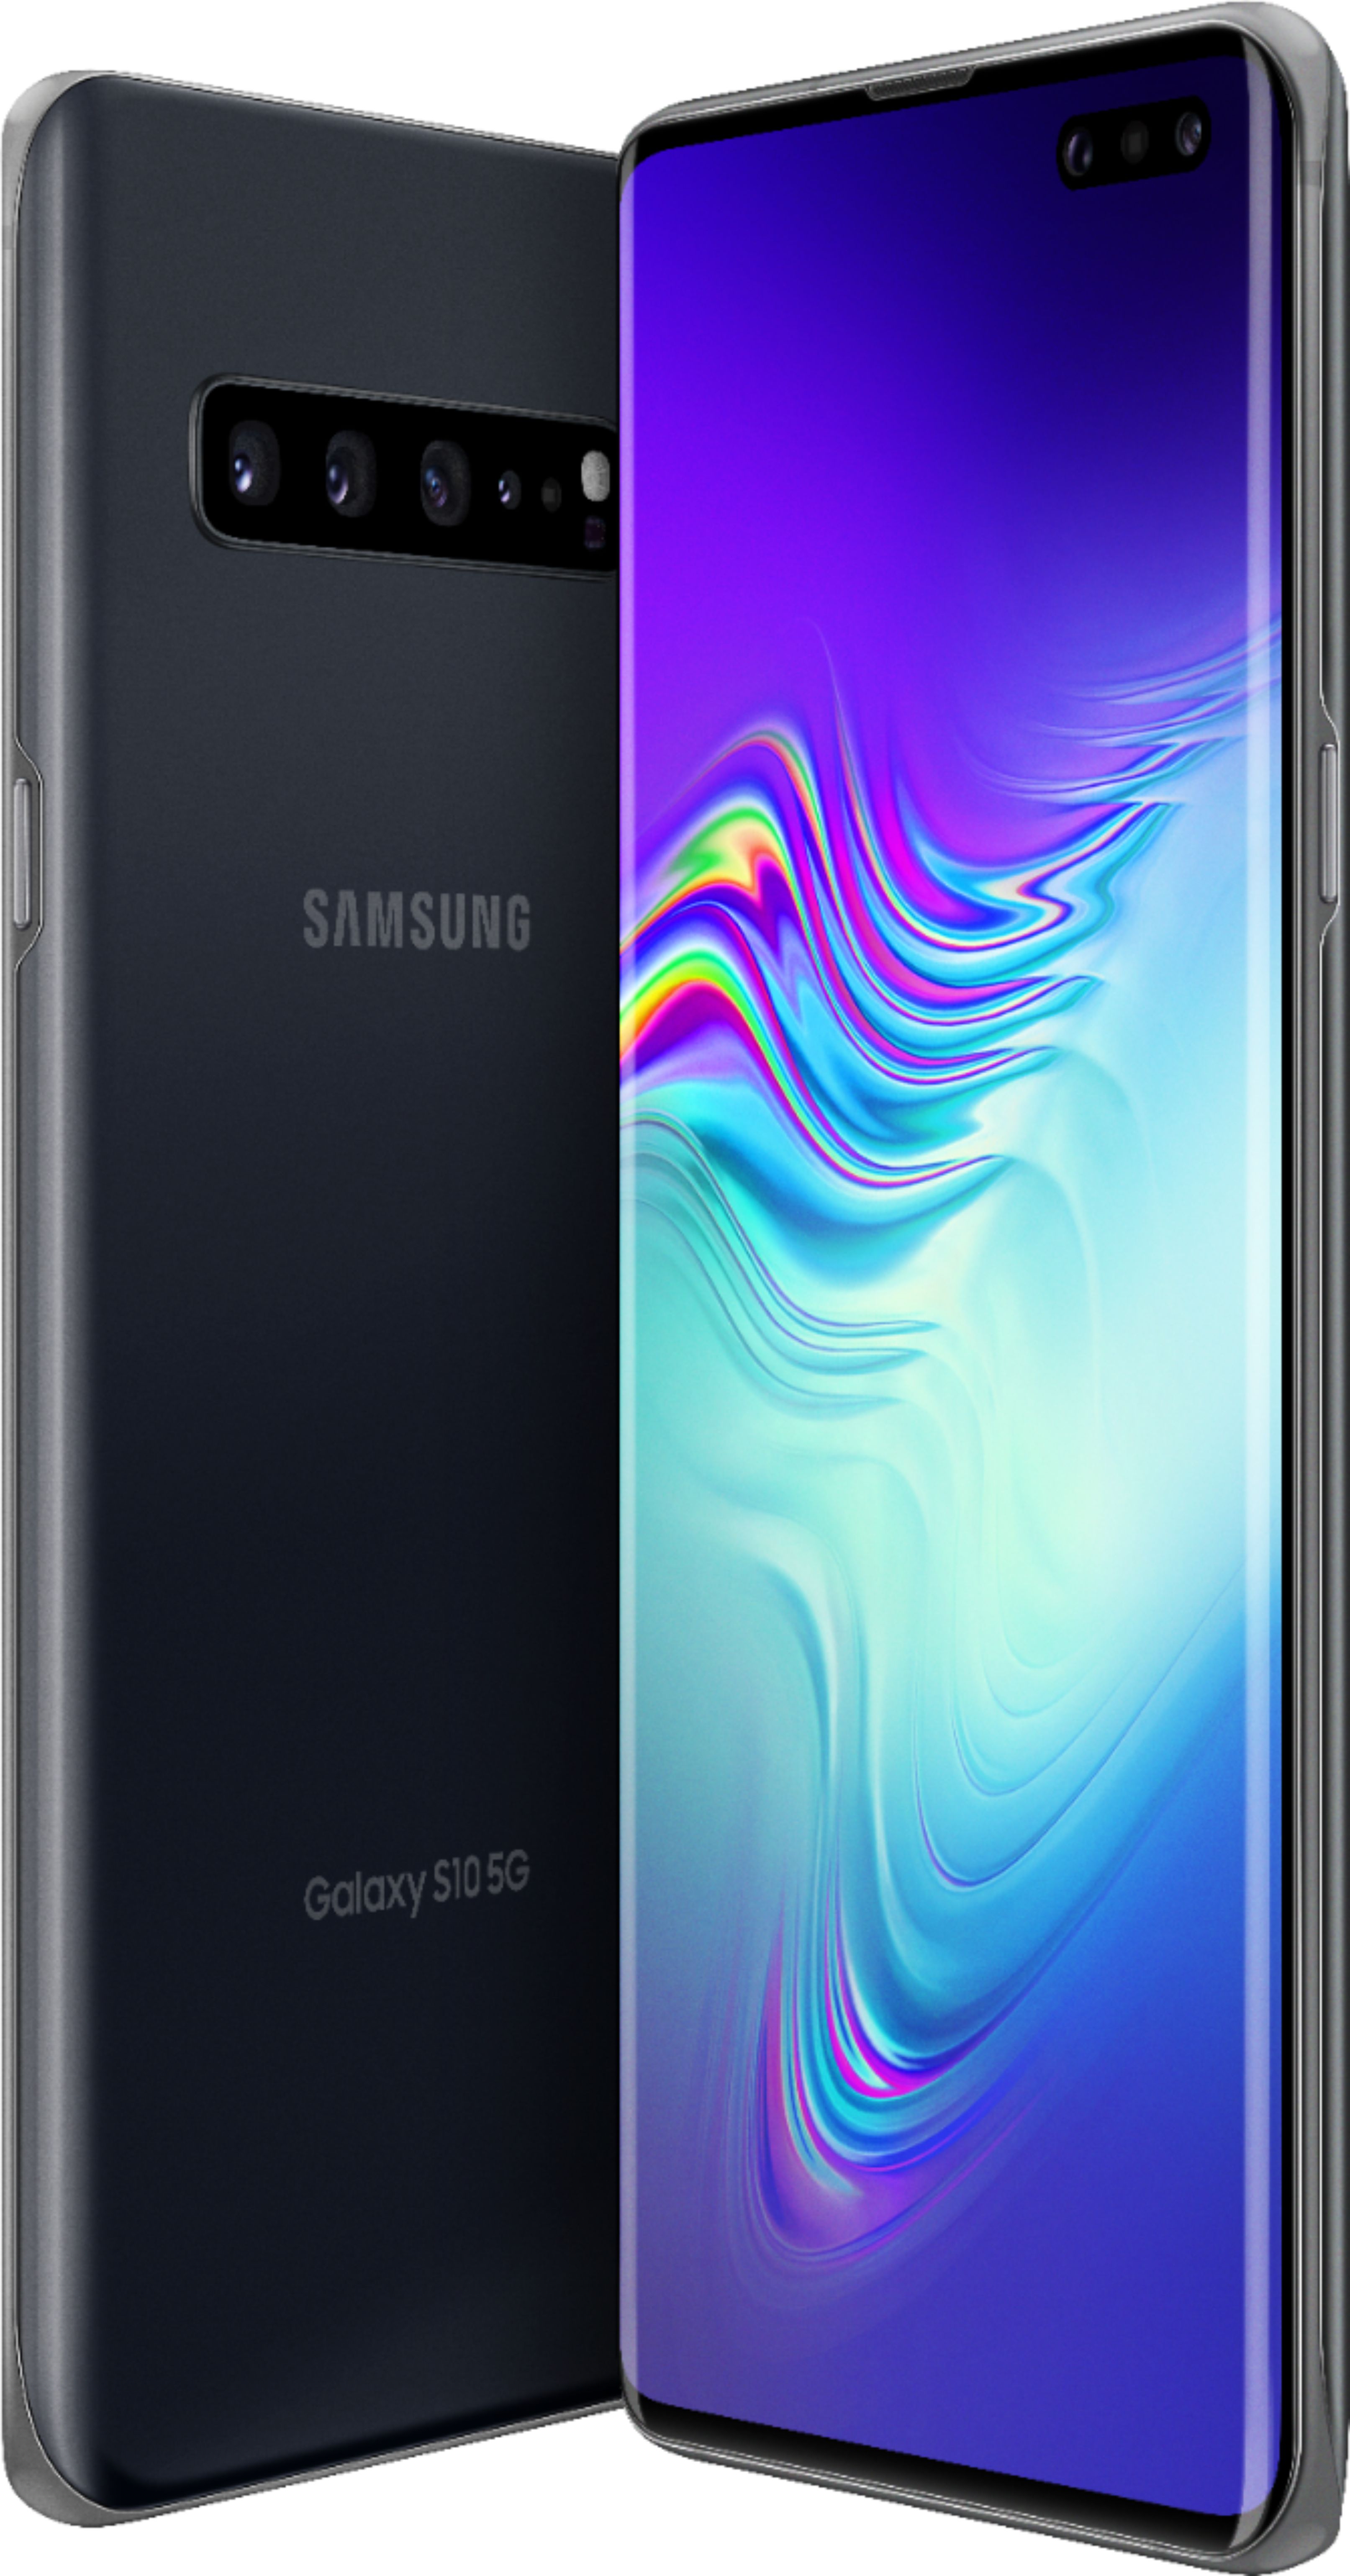 Customer Reviews Samsung Galaxy S10 5g Enabled 256gb Majestic Verizon Smg977uzav Best Buy